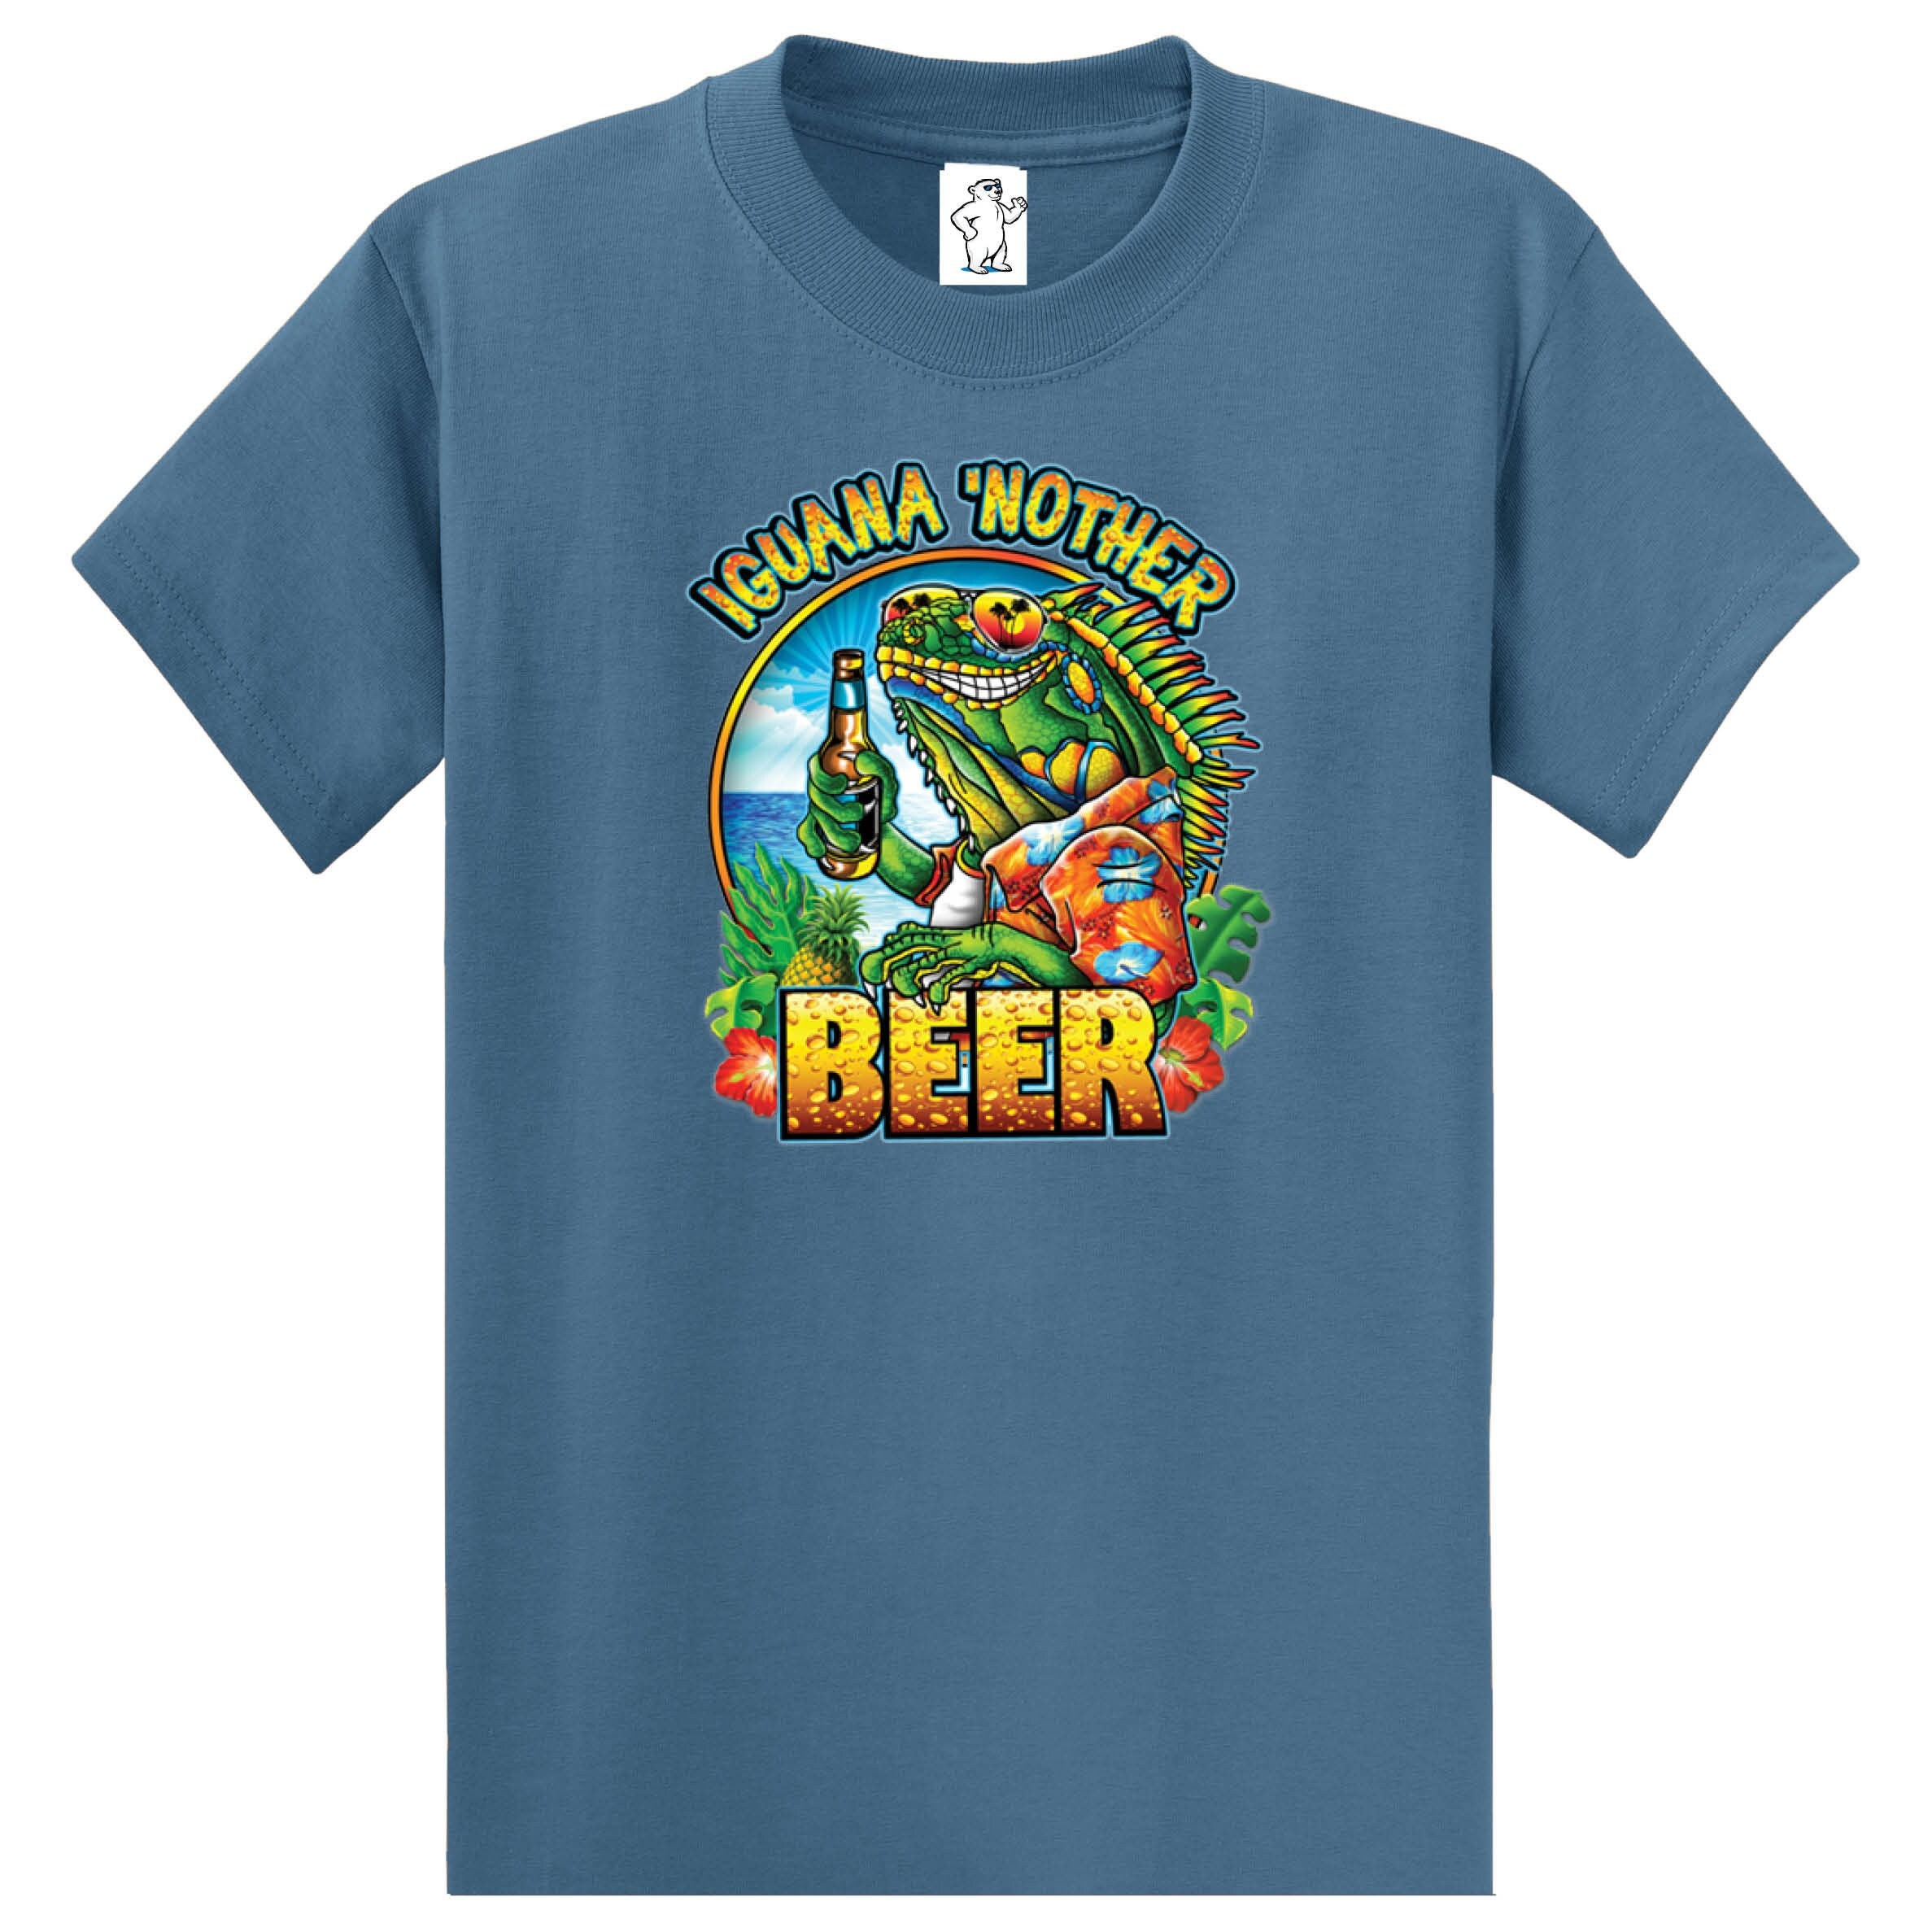 Iguana Nother Beer Funny Shirts men's Shirts Big and Tall Shirts